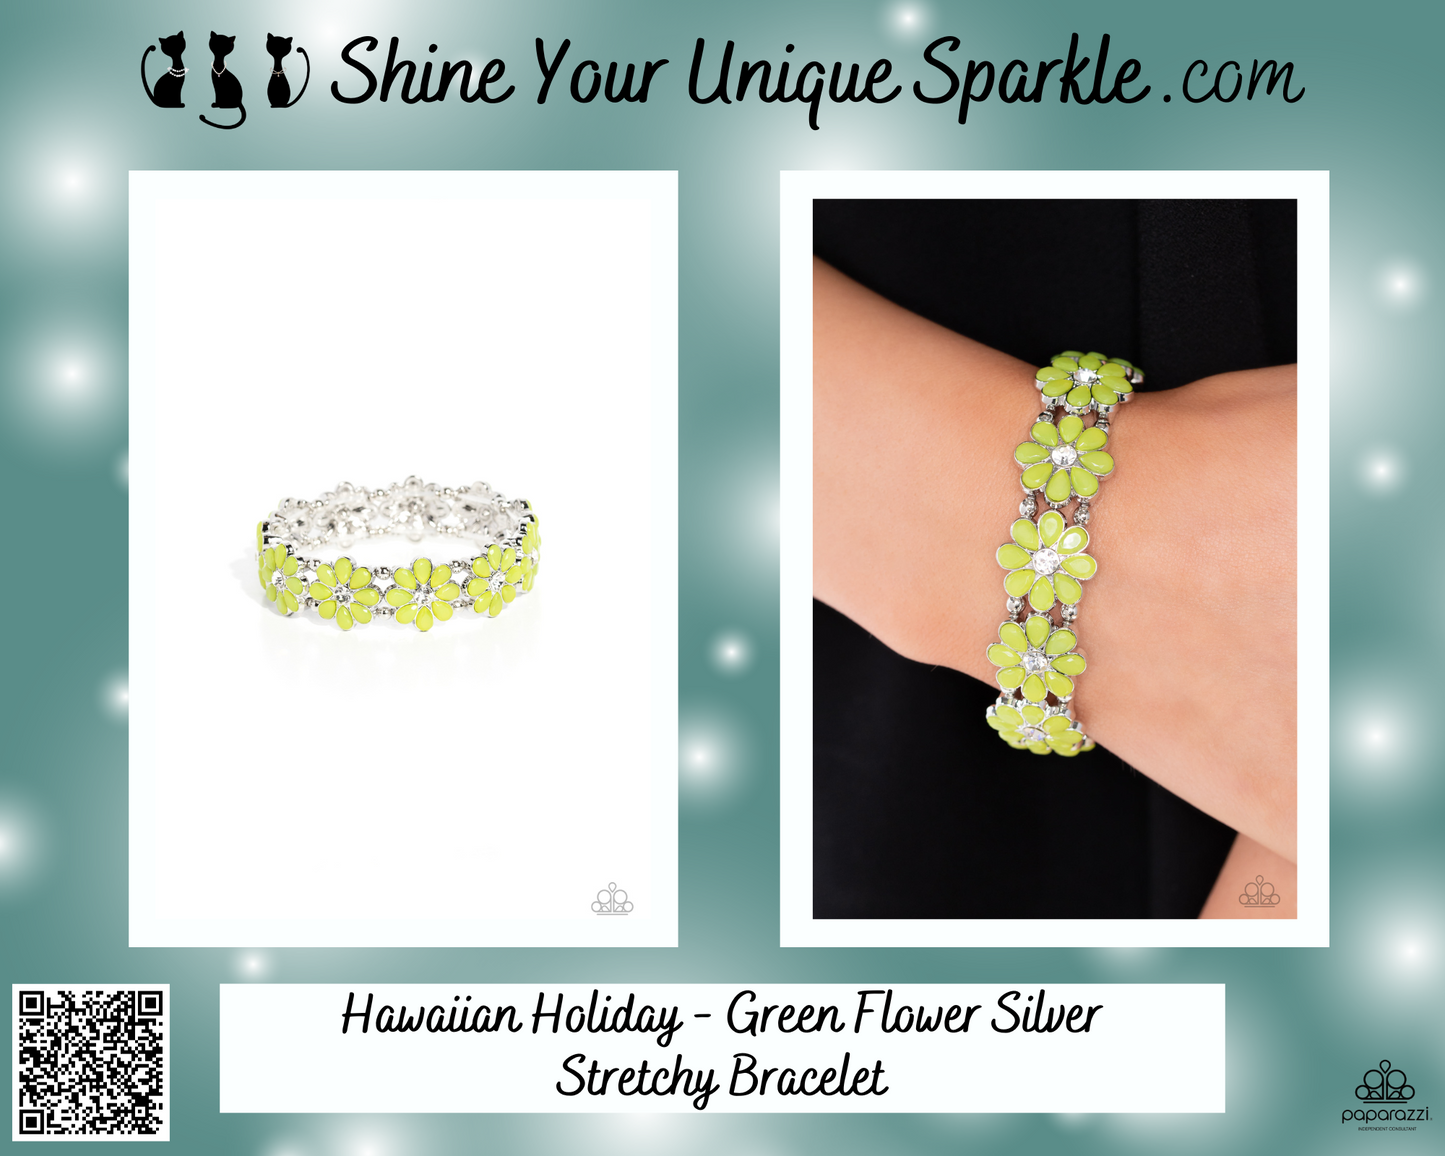 Hawaiian Holiday - Green Flower Silver Stretchy Bracelet